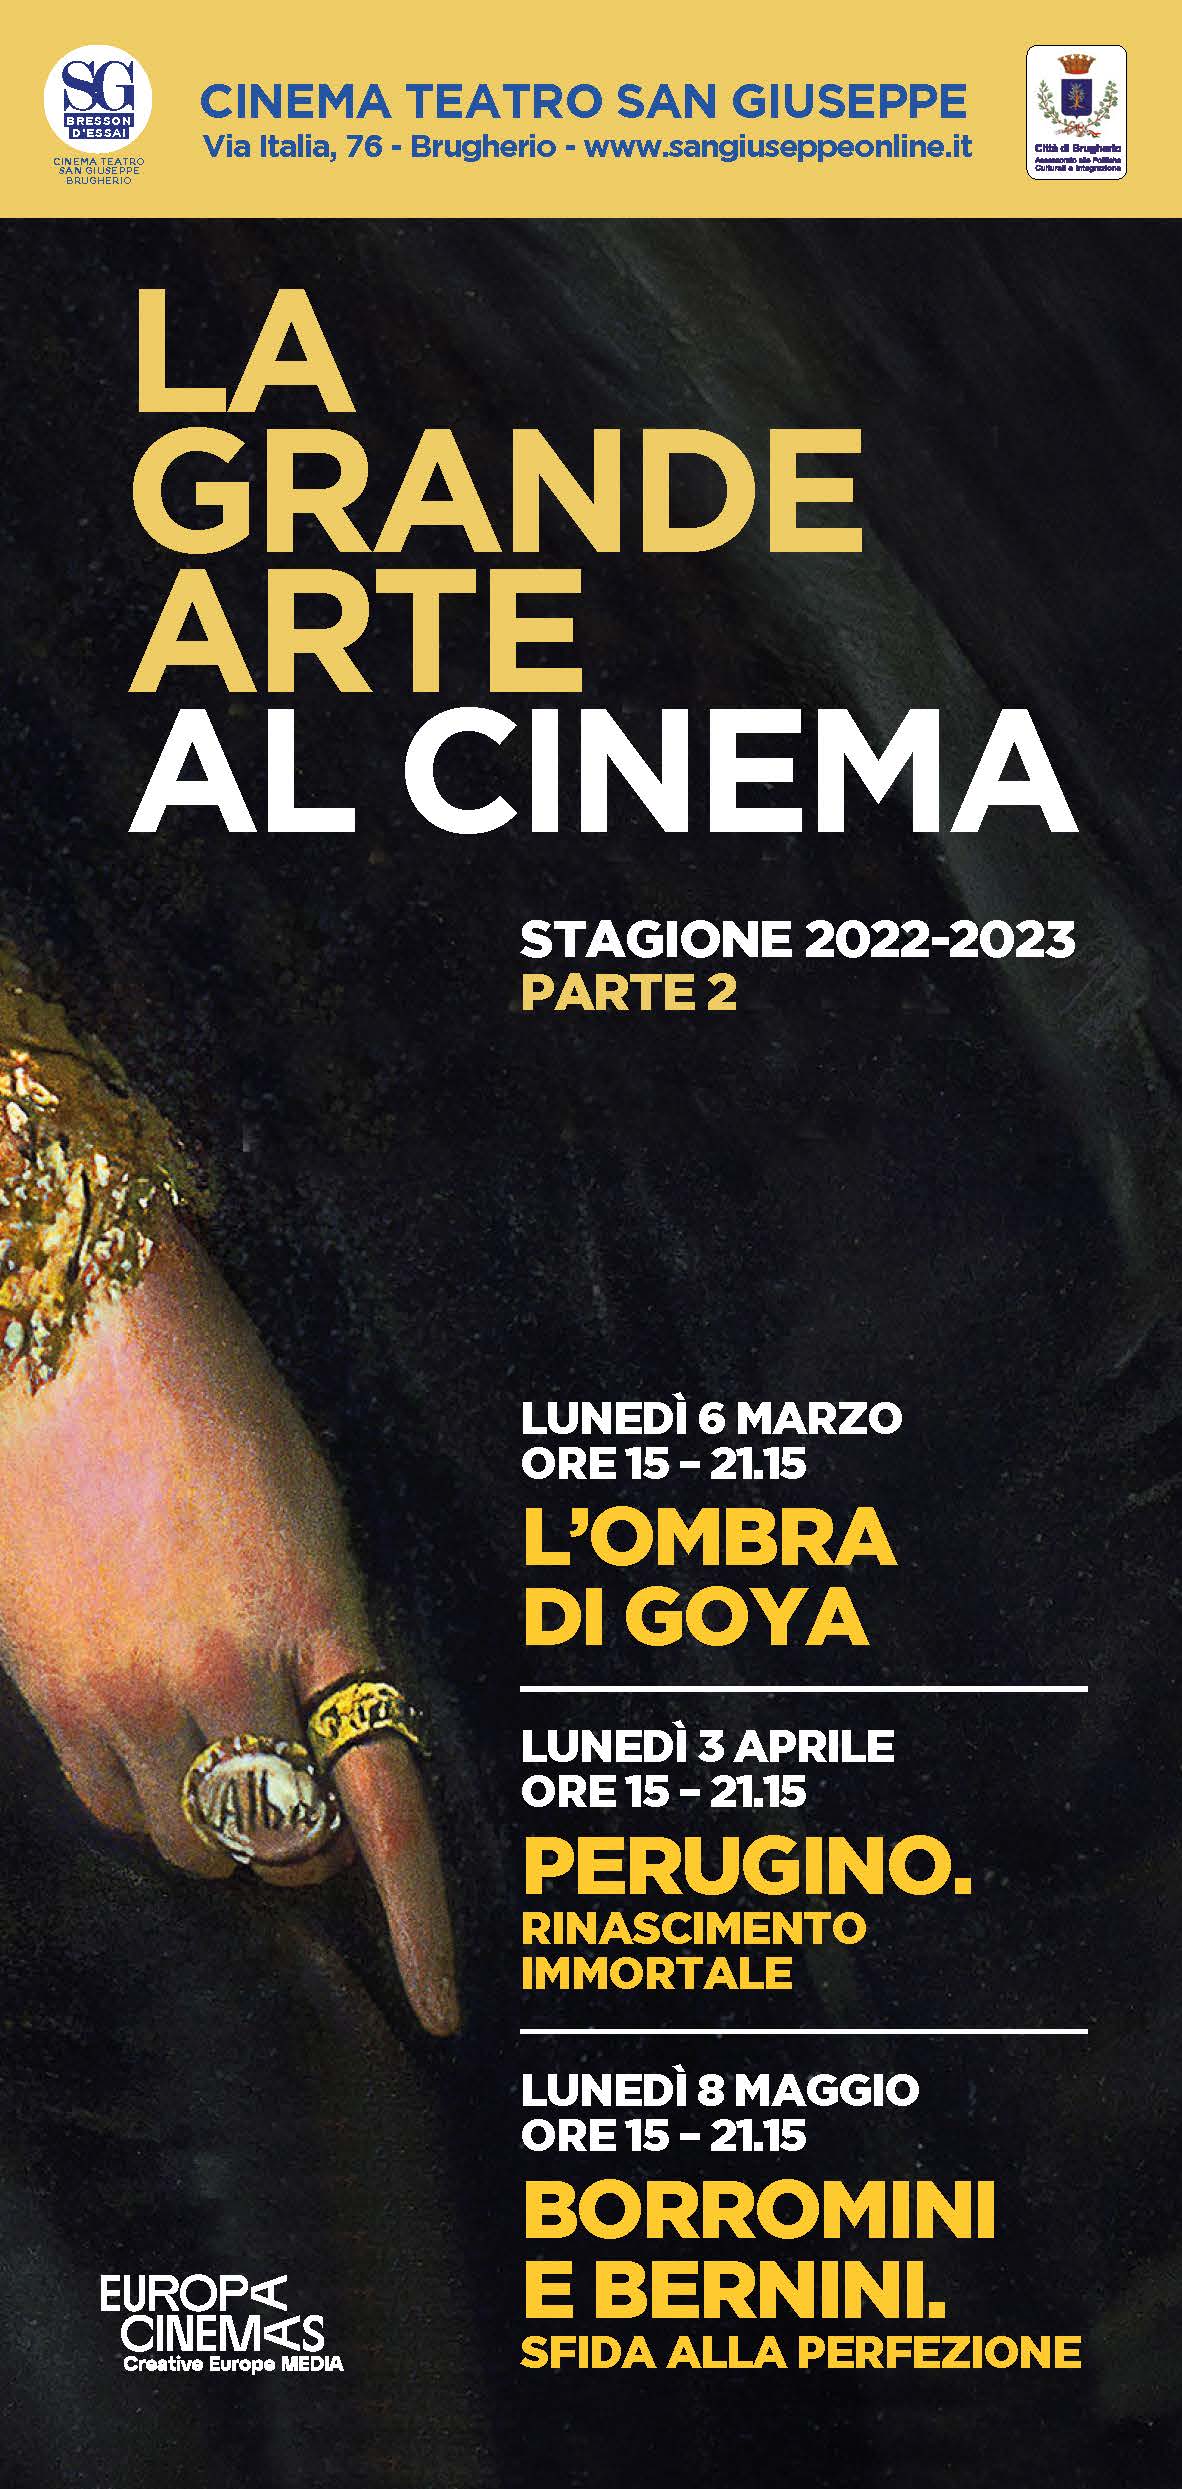 La Grande Arte al Cinema, stagione 2022-2023 parte 2 al San Giuseppe